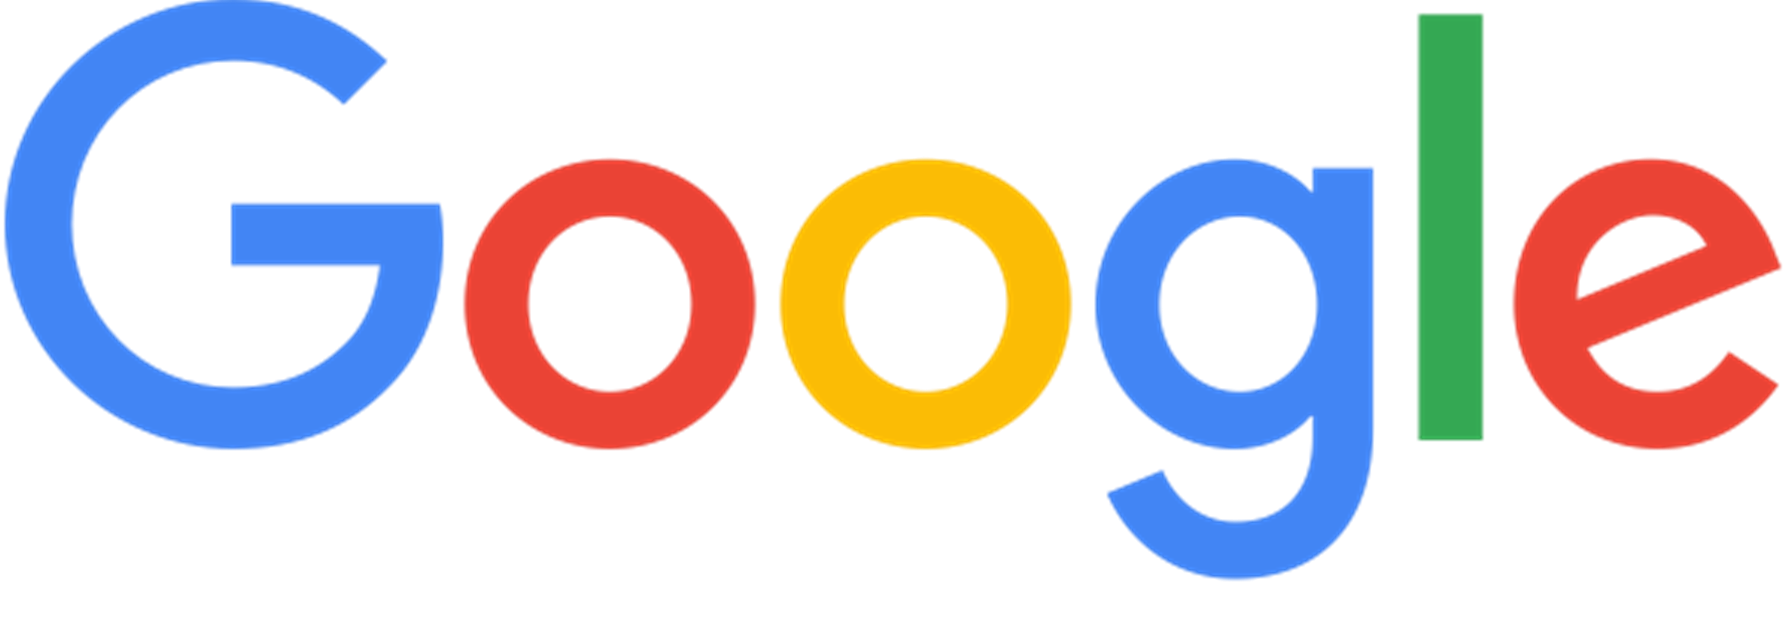 det nye Google-logo